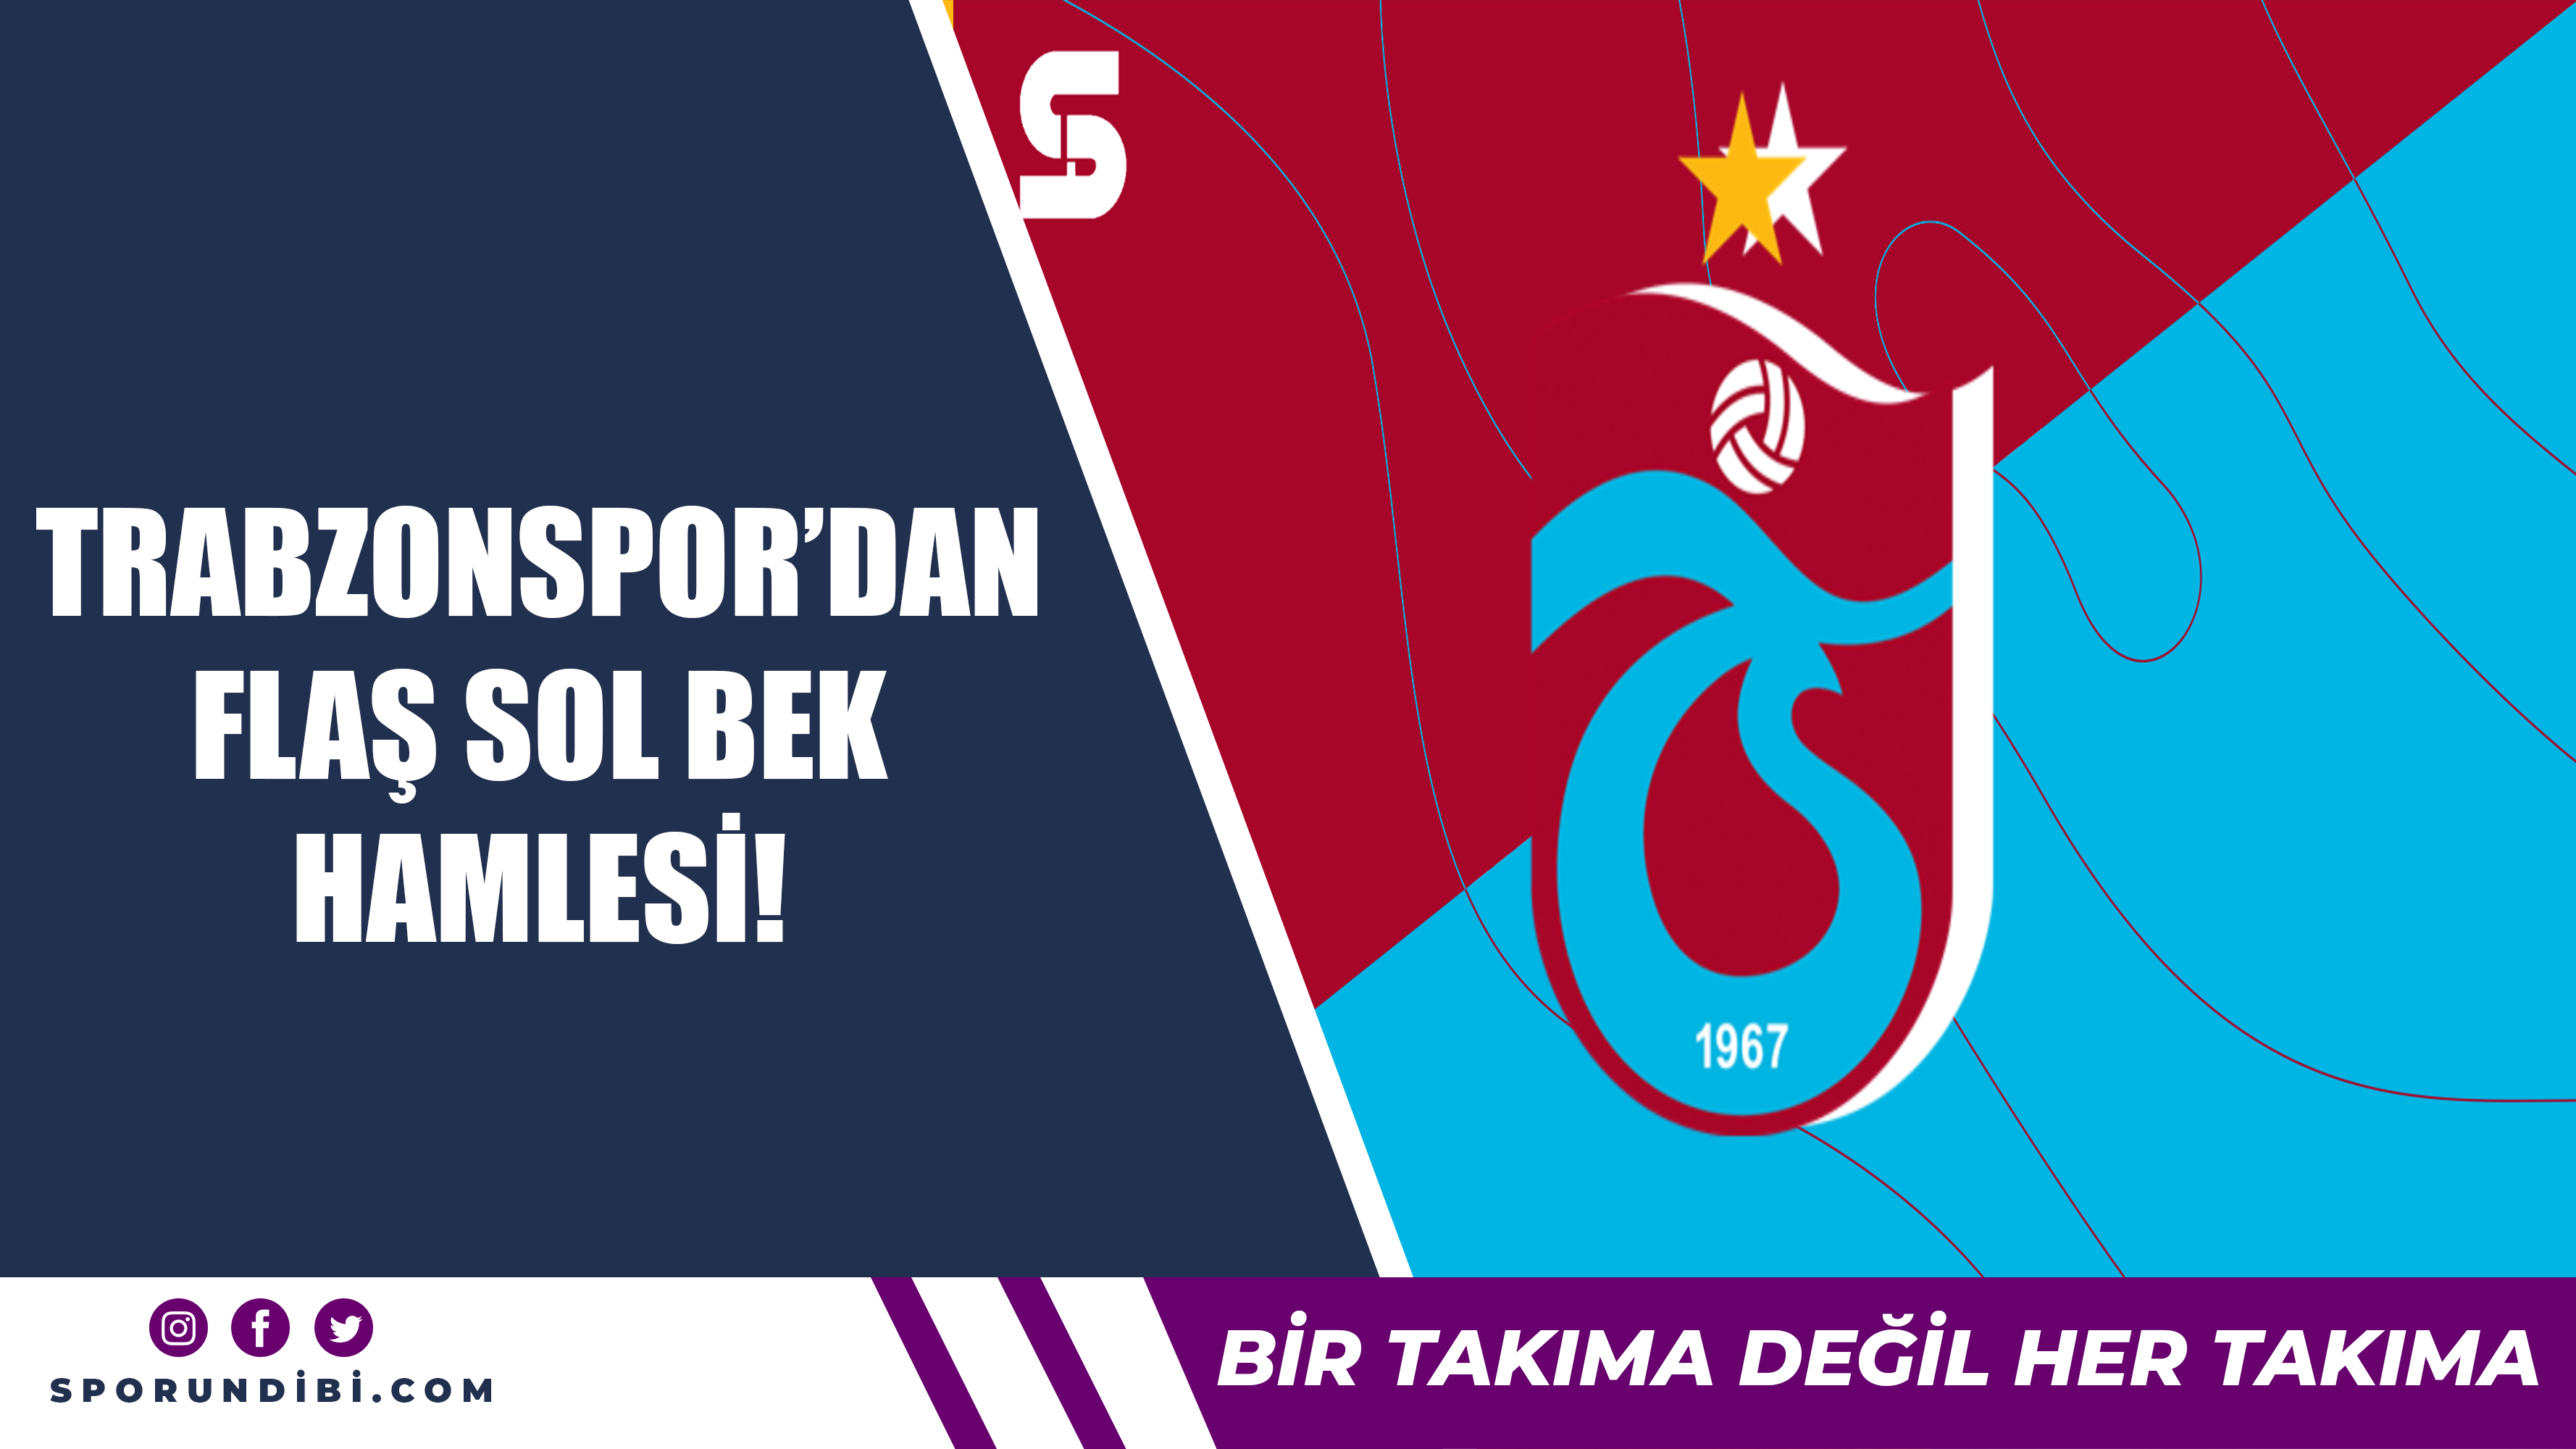 Trabzonspor'dan flaş sol bek hamlesi!